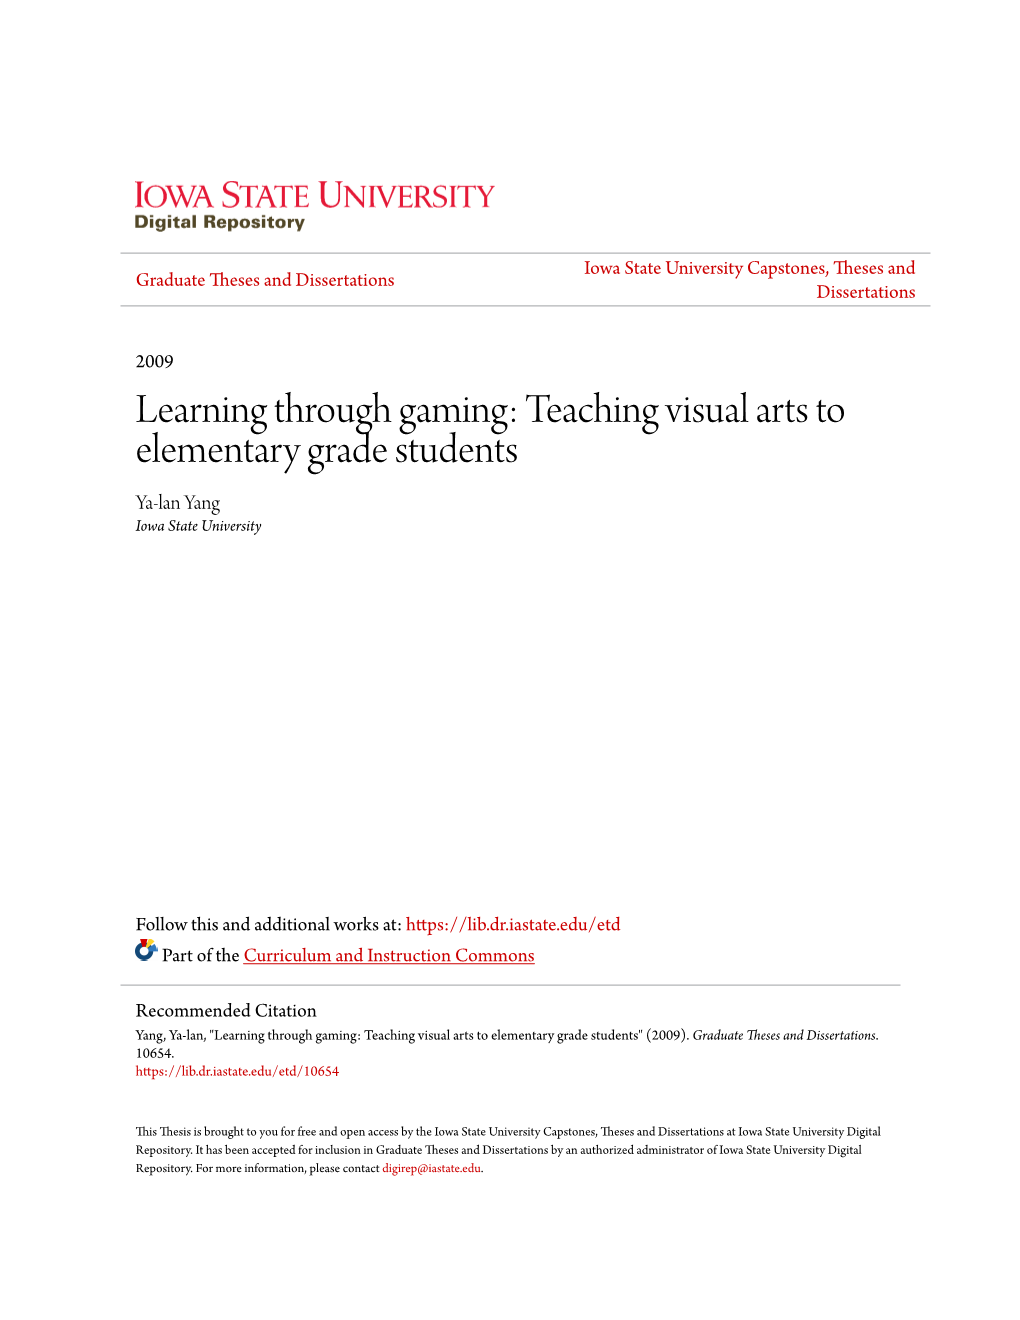 Learning Through Gaming: Teaching Visual Arts to Elementary Grade Students Ya-Lan Yang Iowa State University